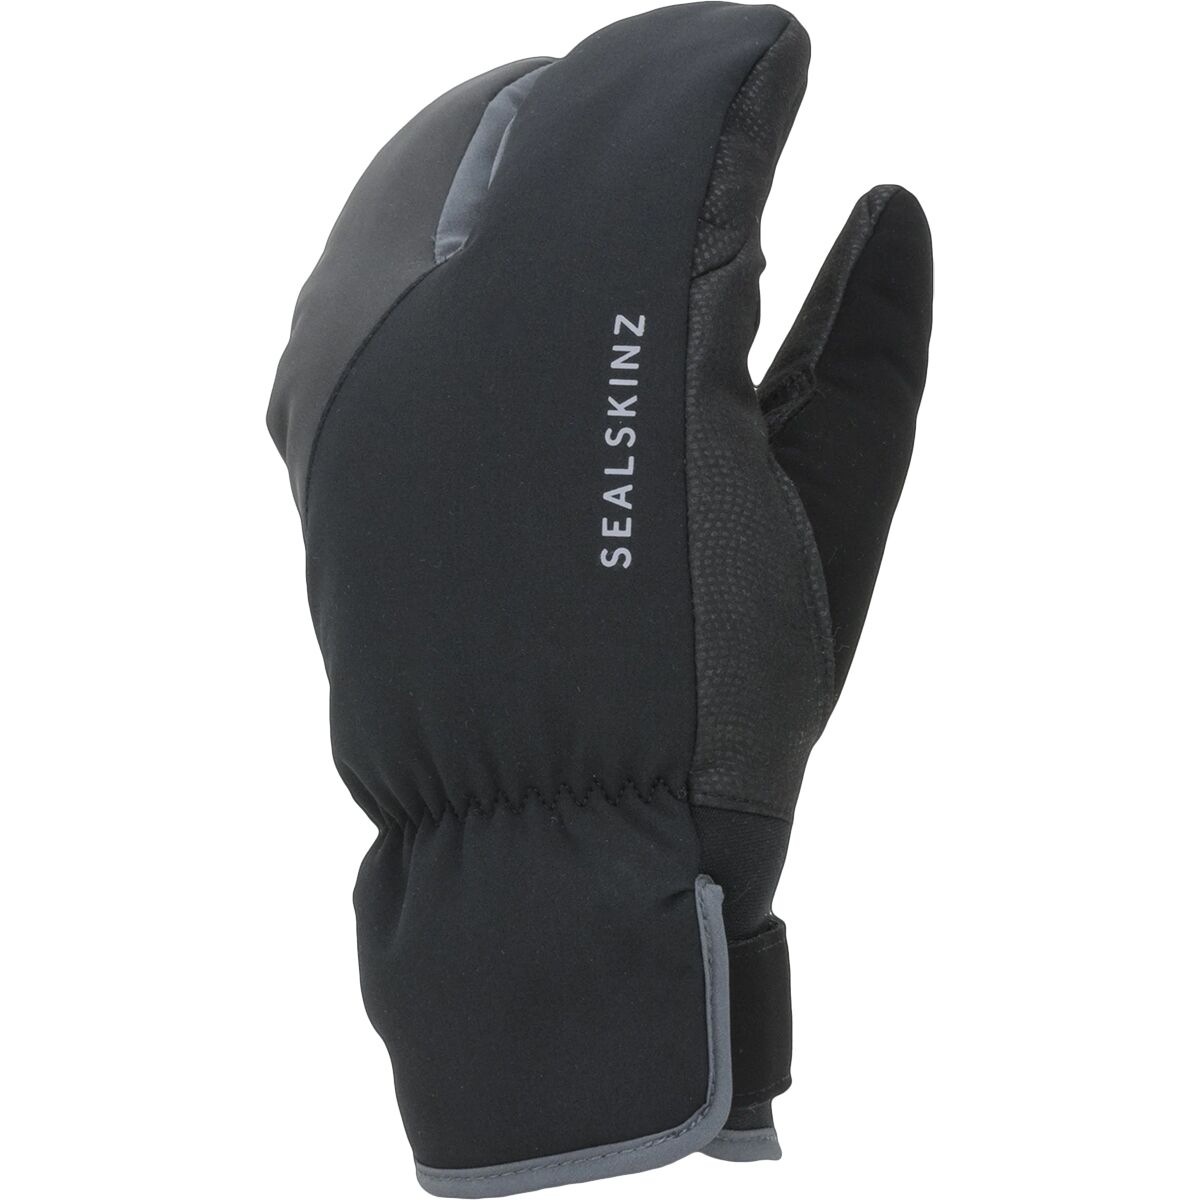 SealSkinz Barwick WP Extreme Cold Weather Cycle Split Finger Glove Black/Grey, L - Men's